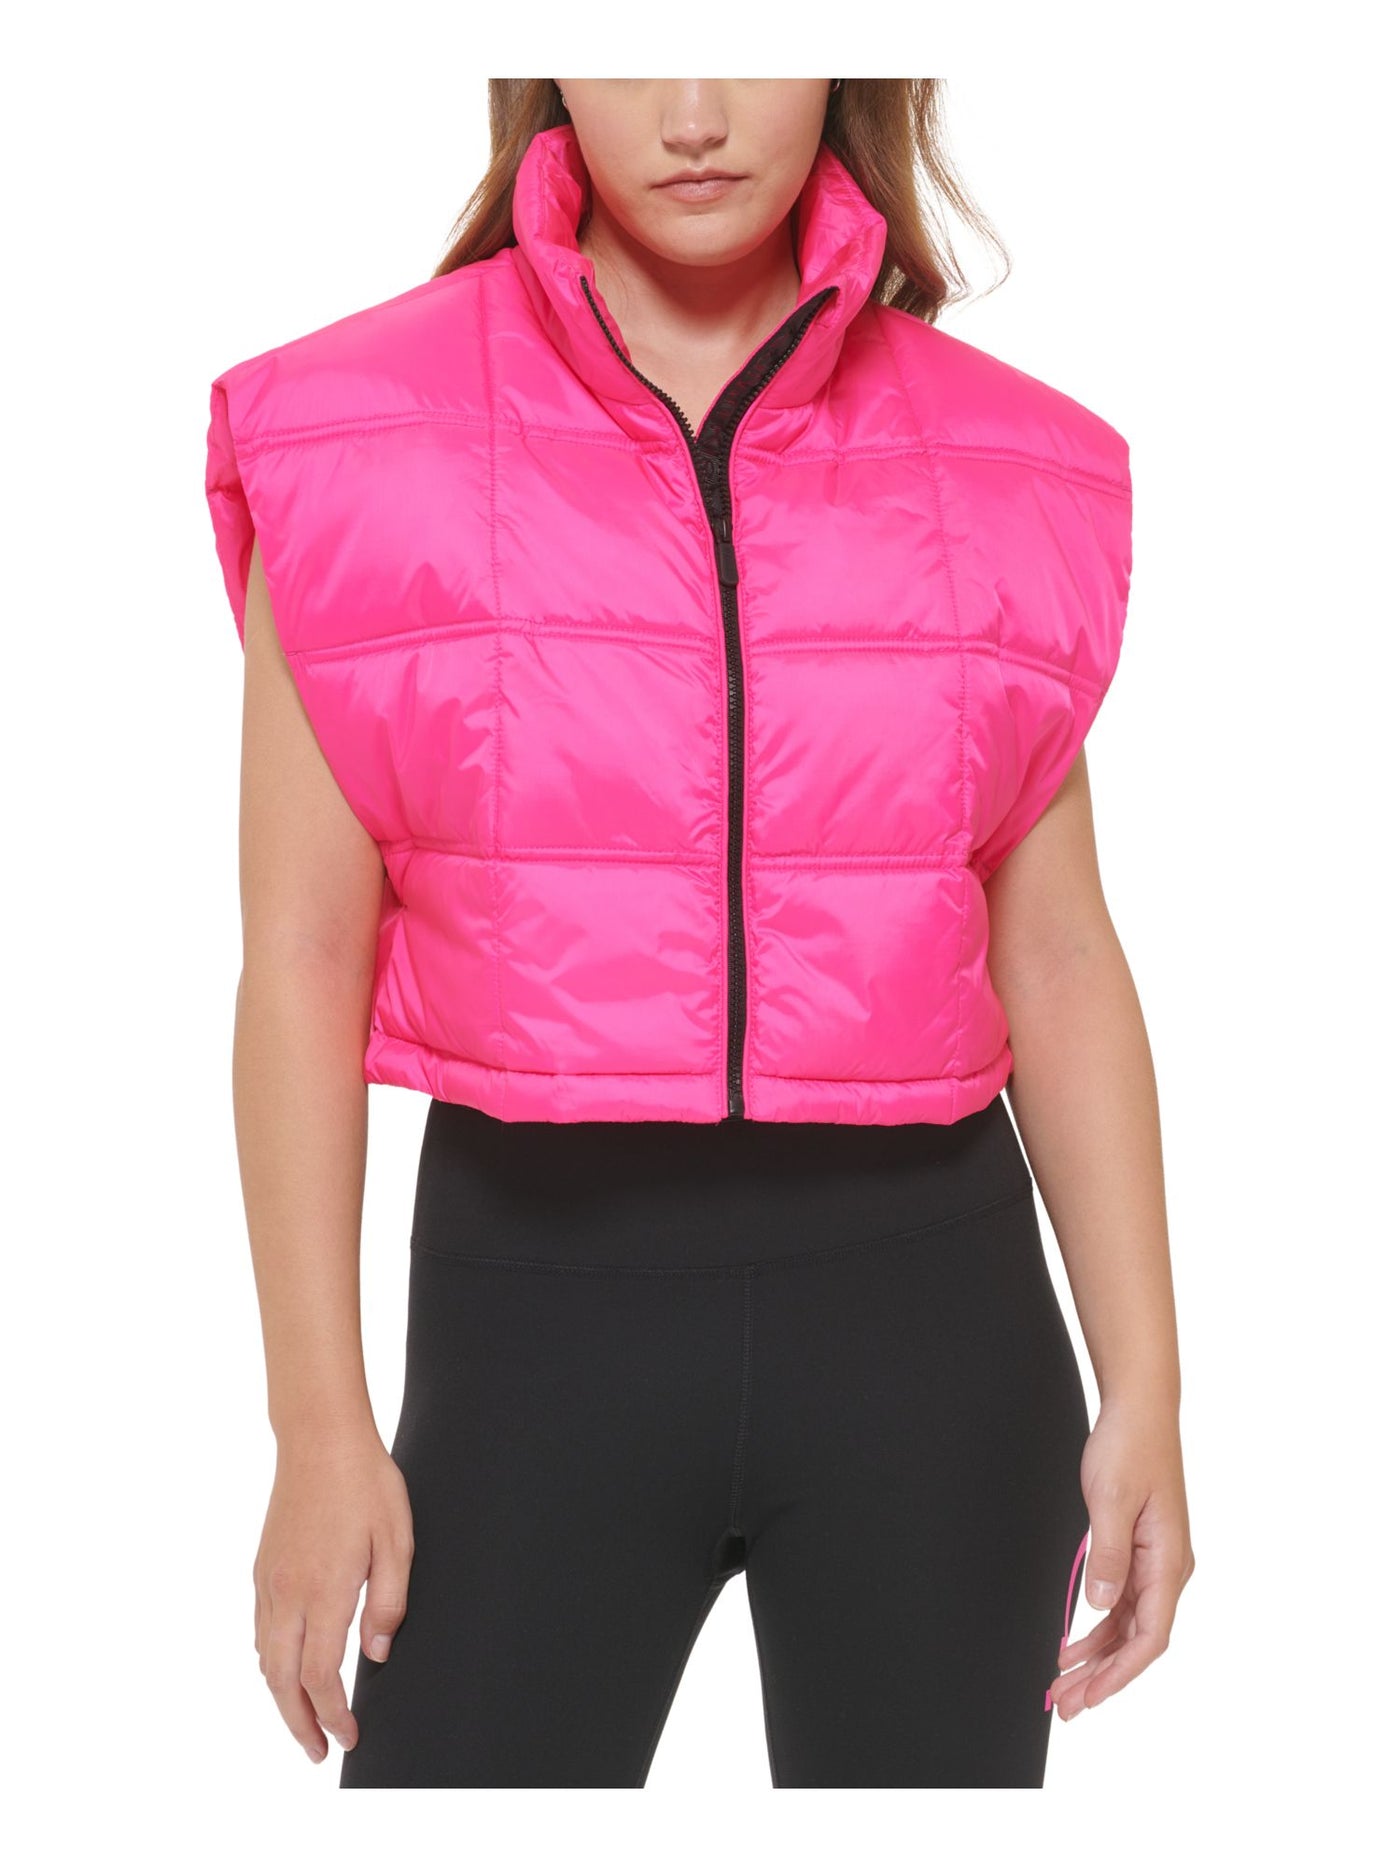 CALVIN KLEIN PERFORMANCE Womens Pink Zippered Vest Jacket L\G